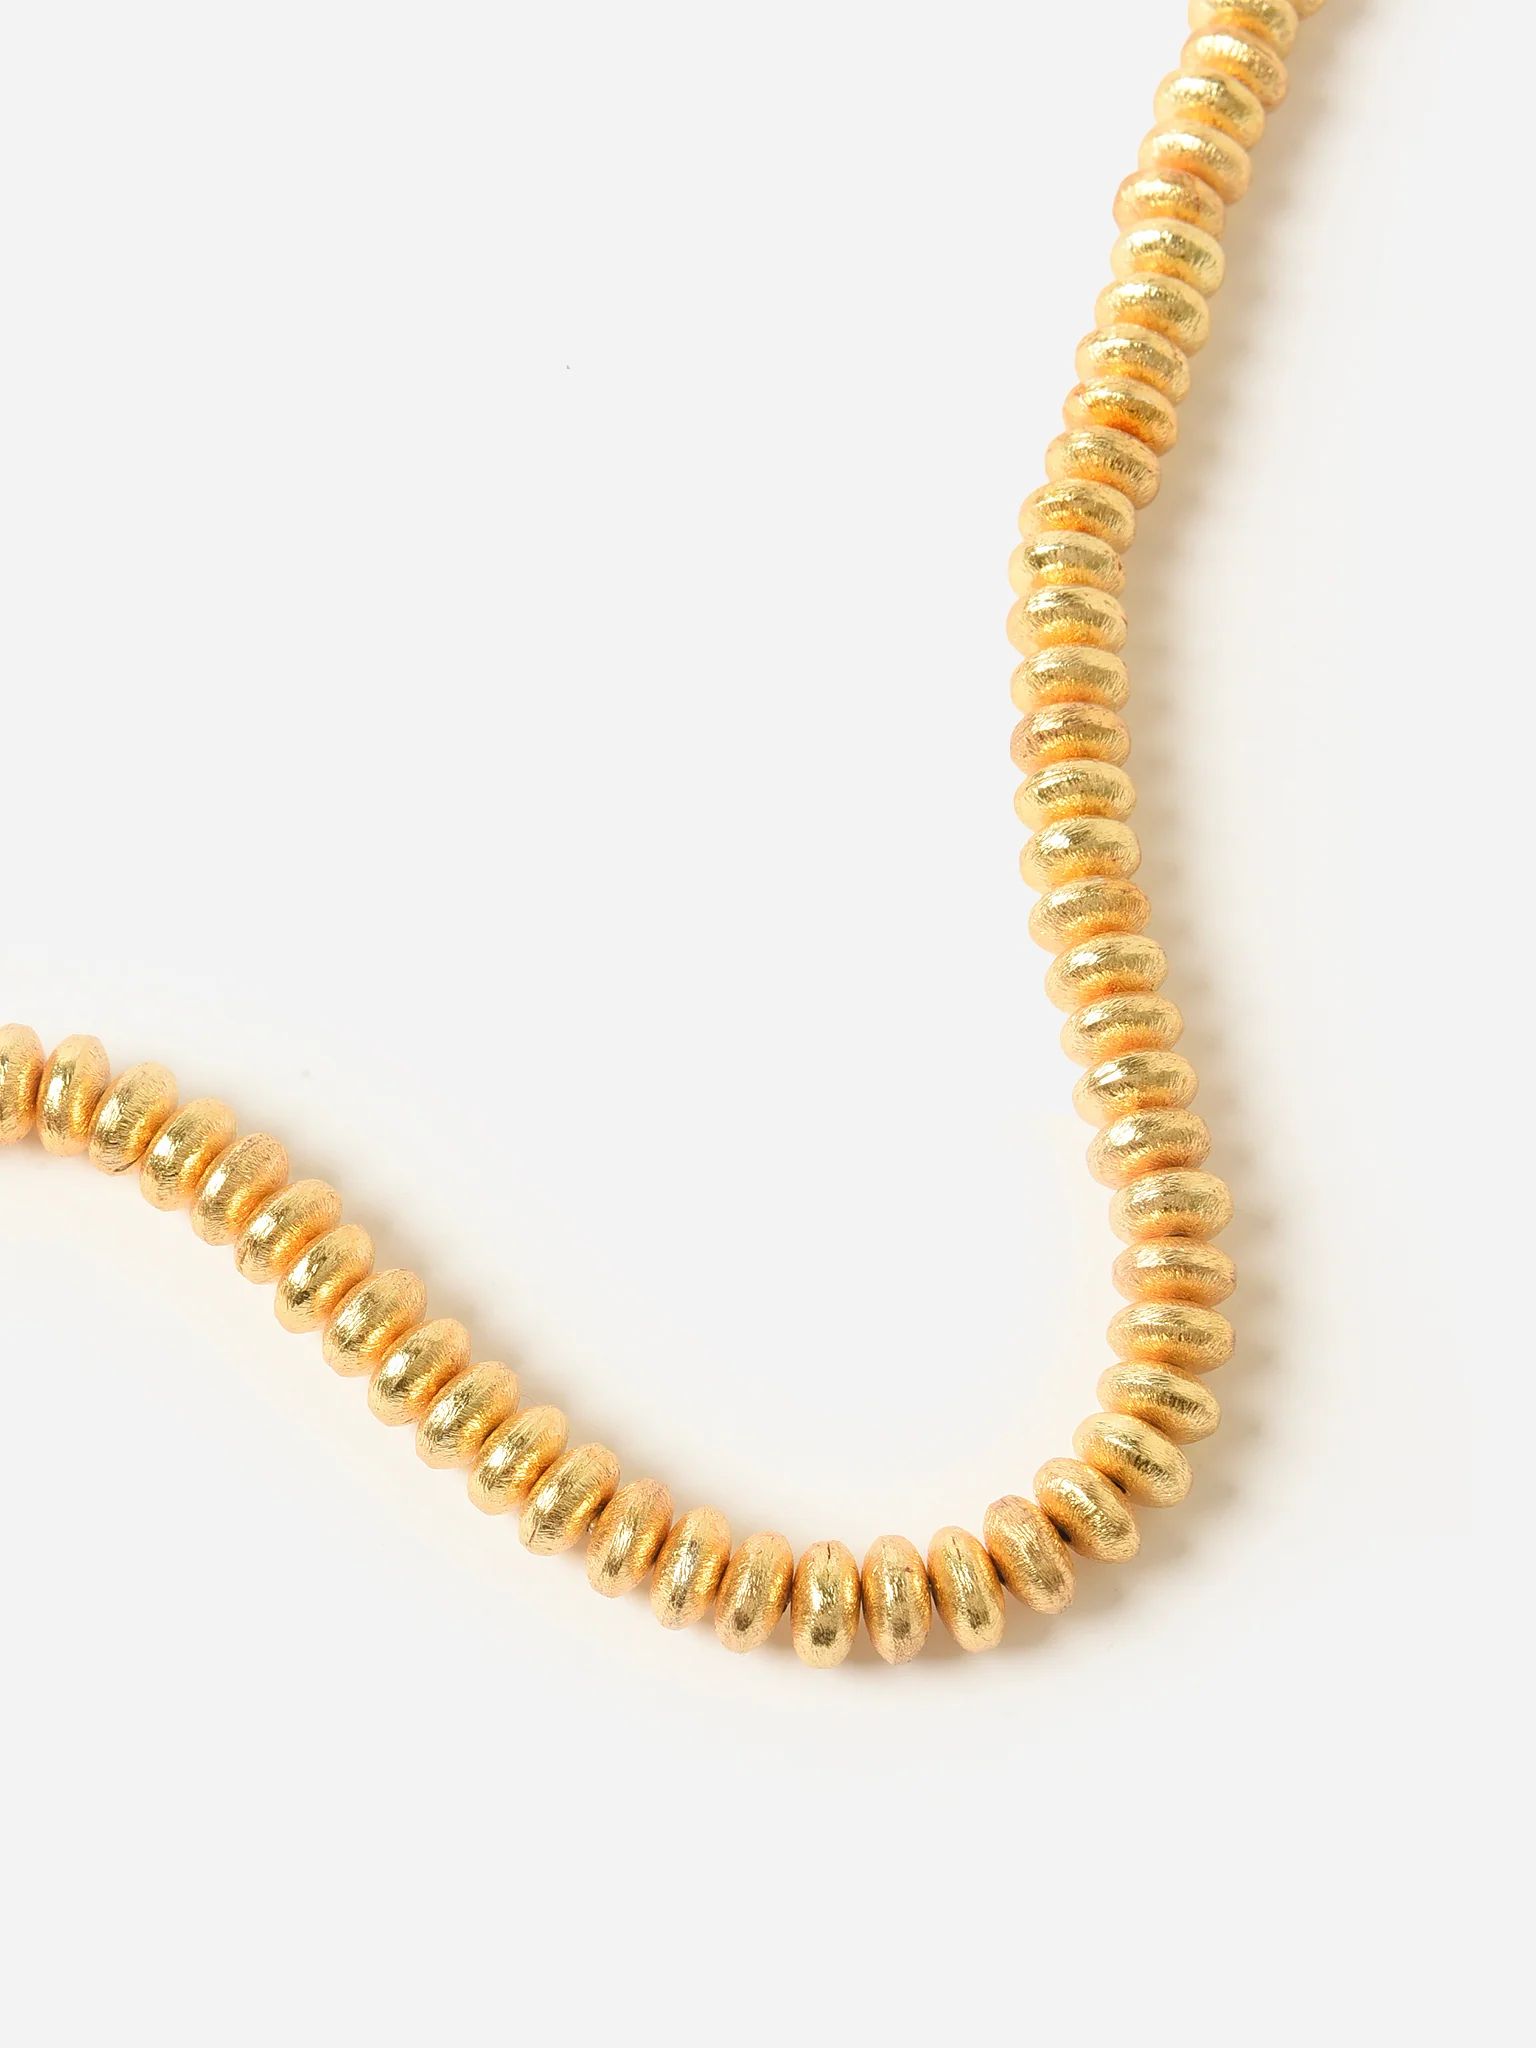 ALEXA LEIGH
                      
                     Brushed Gold Necklace | Saint Bernard